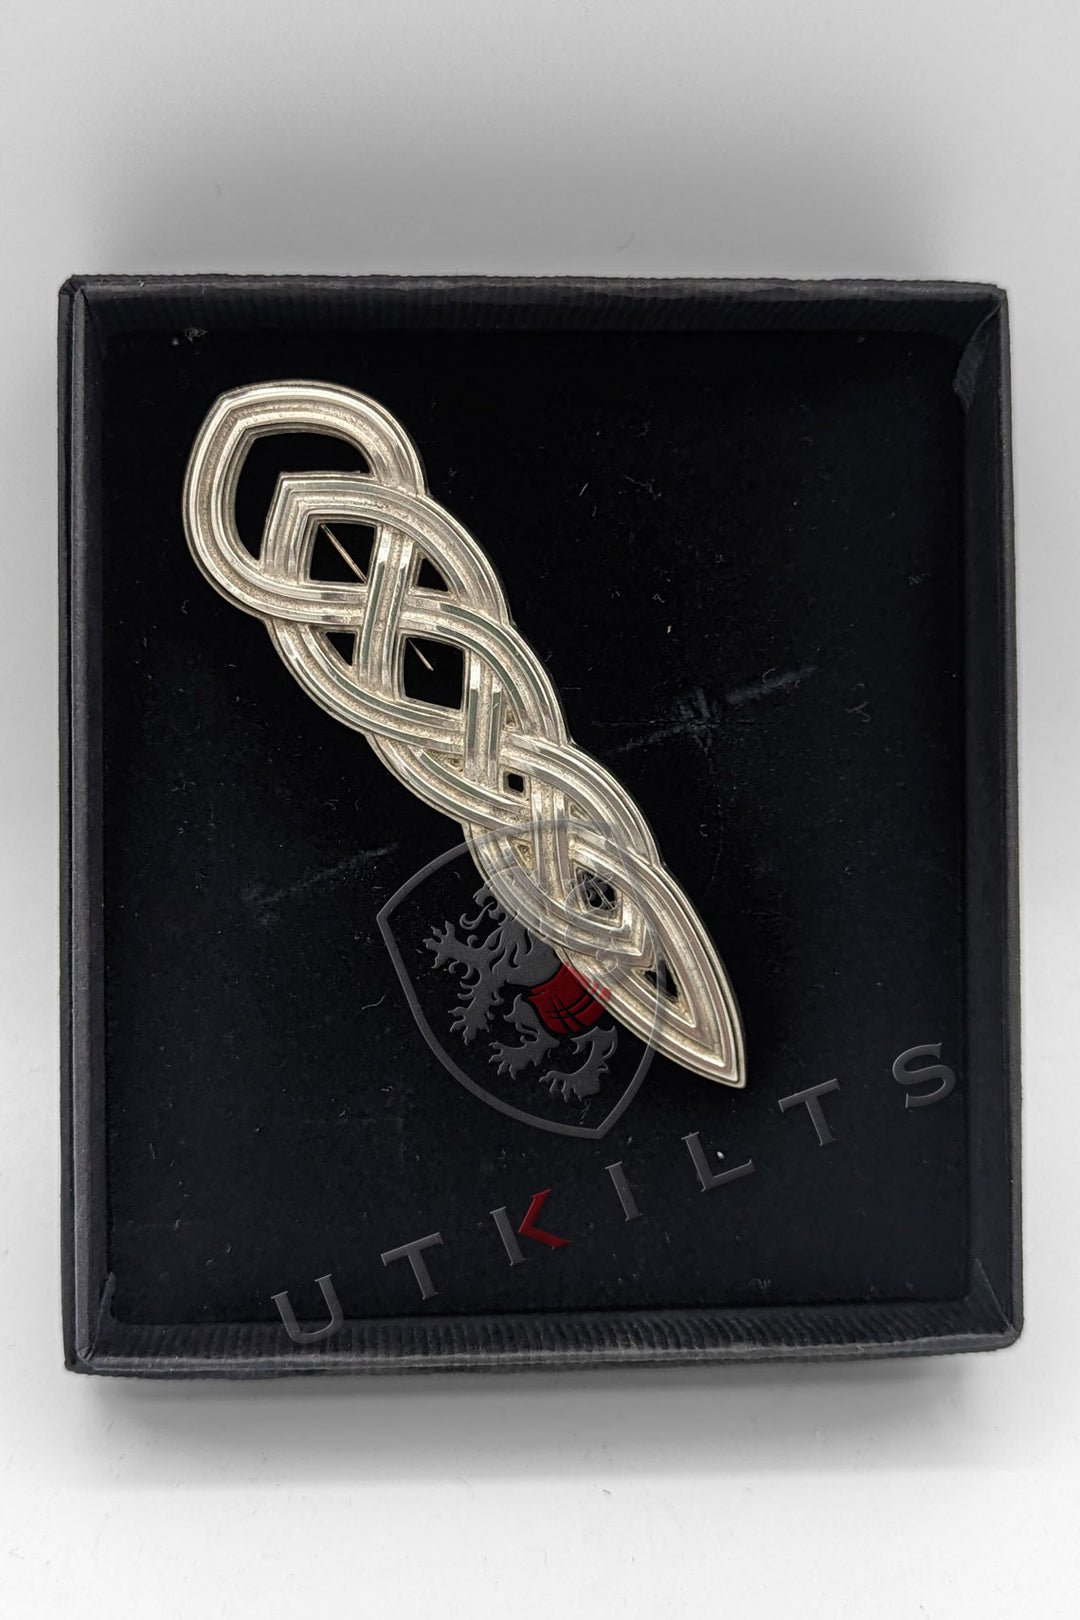 Premium Braided Knot Kilt Pin - Matte or Polished Finish